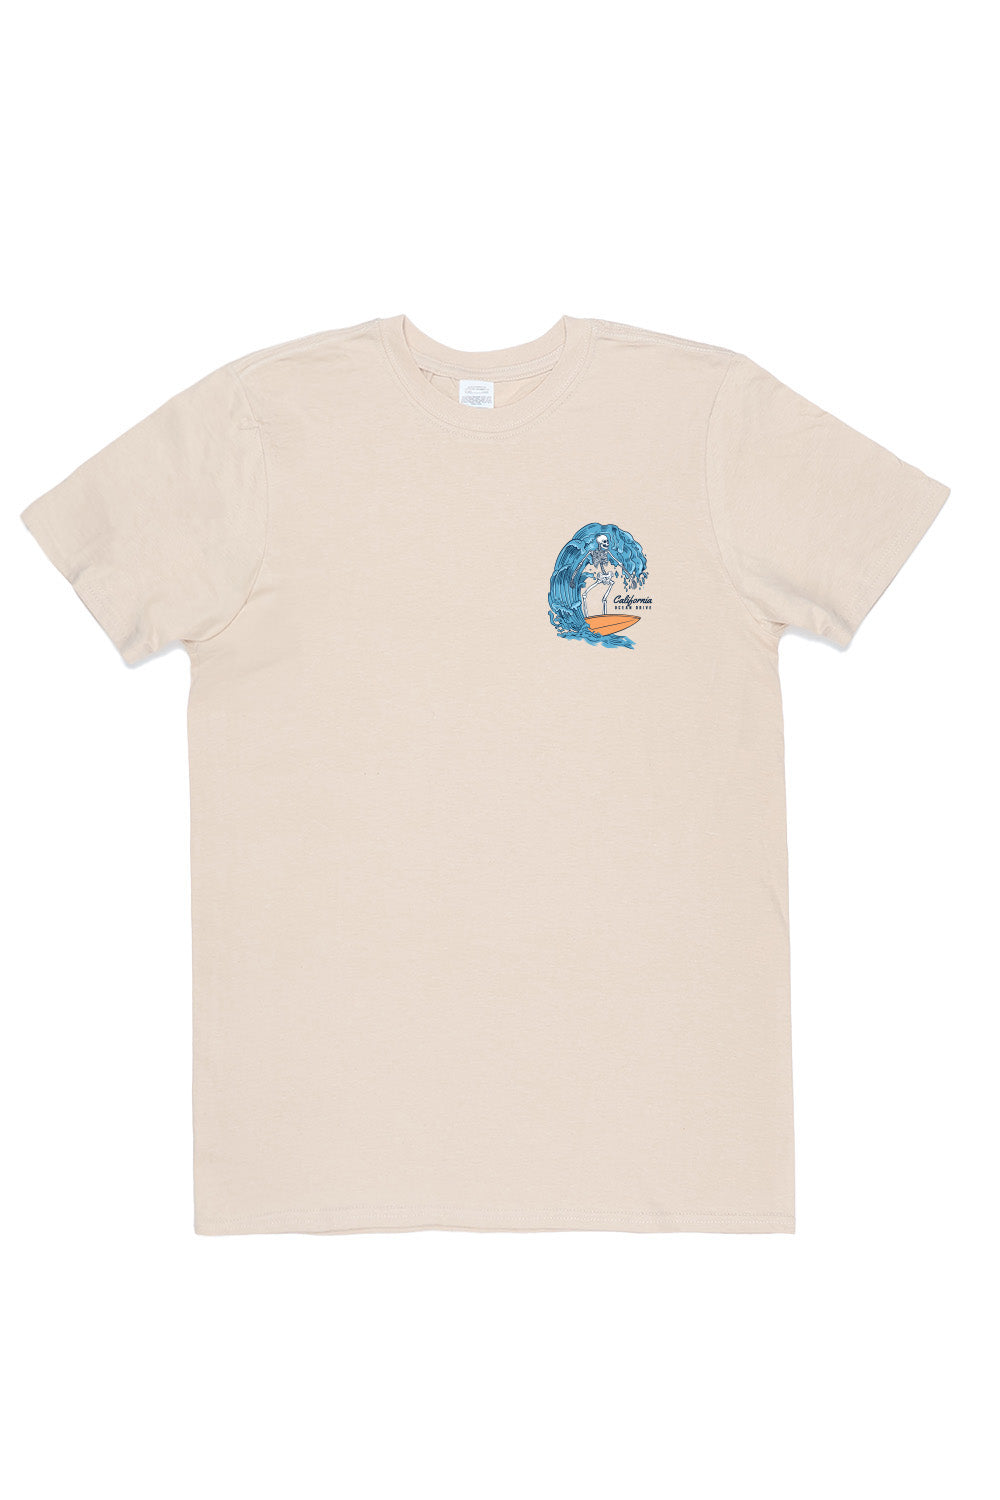 Beach Wave's T-Shirt in Sand (Custom Packs)